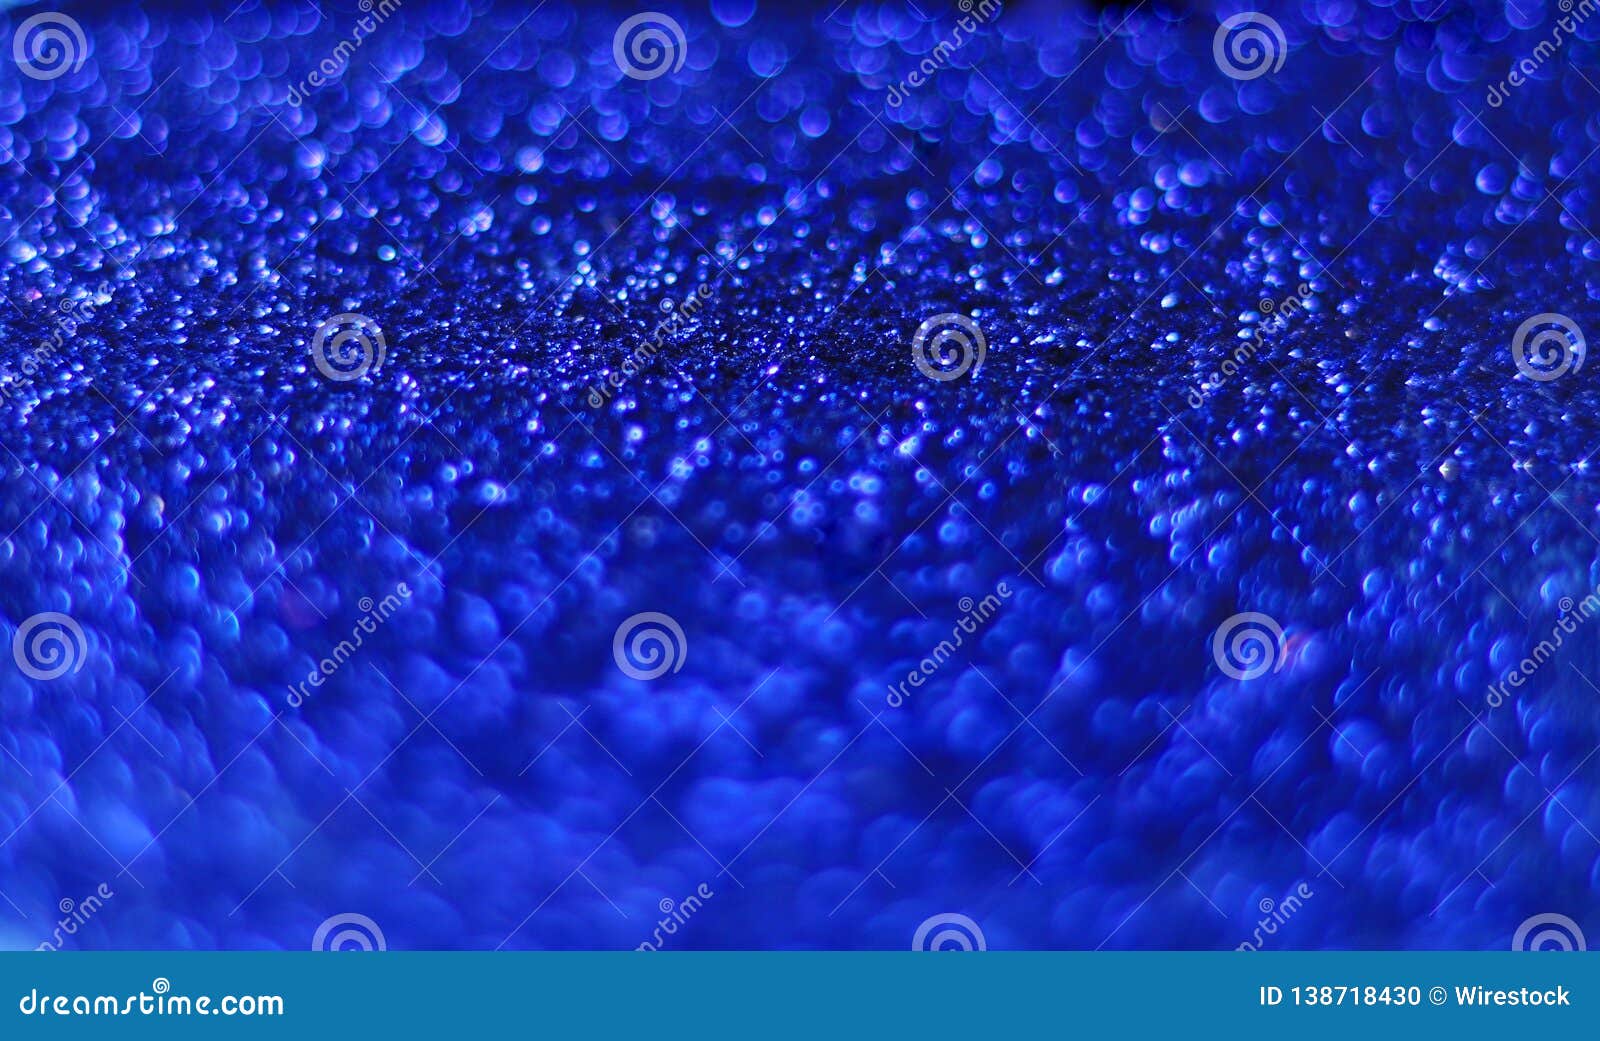 Download 700+ Background Blue Aesthetic HD Paling Keren